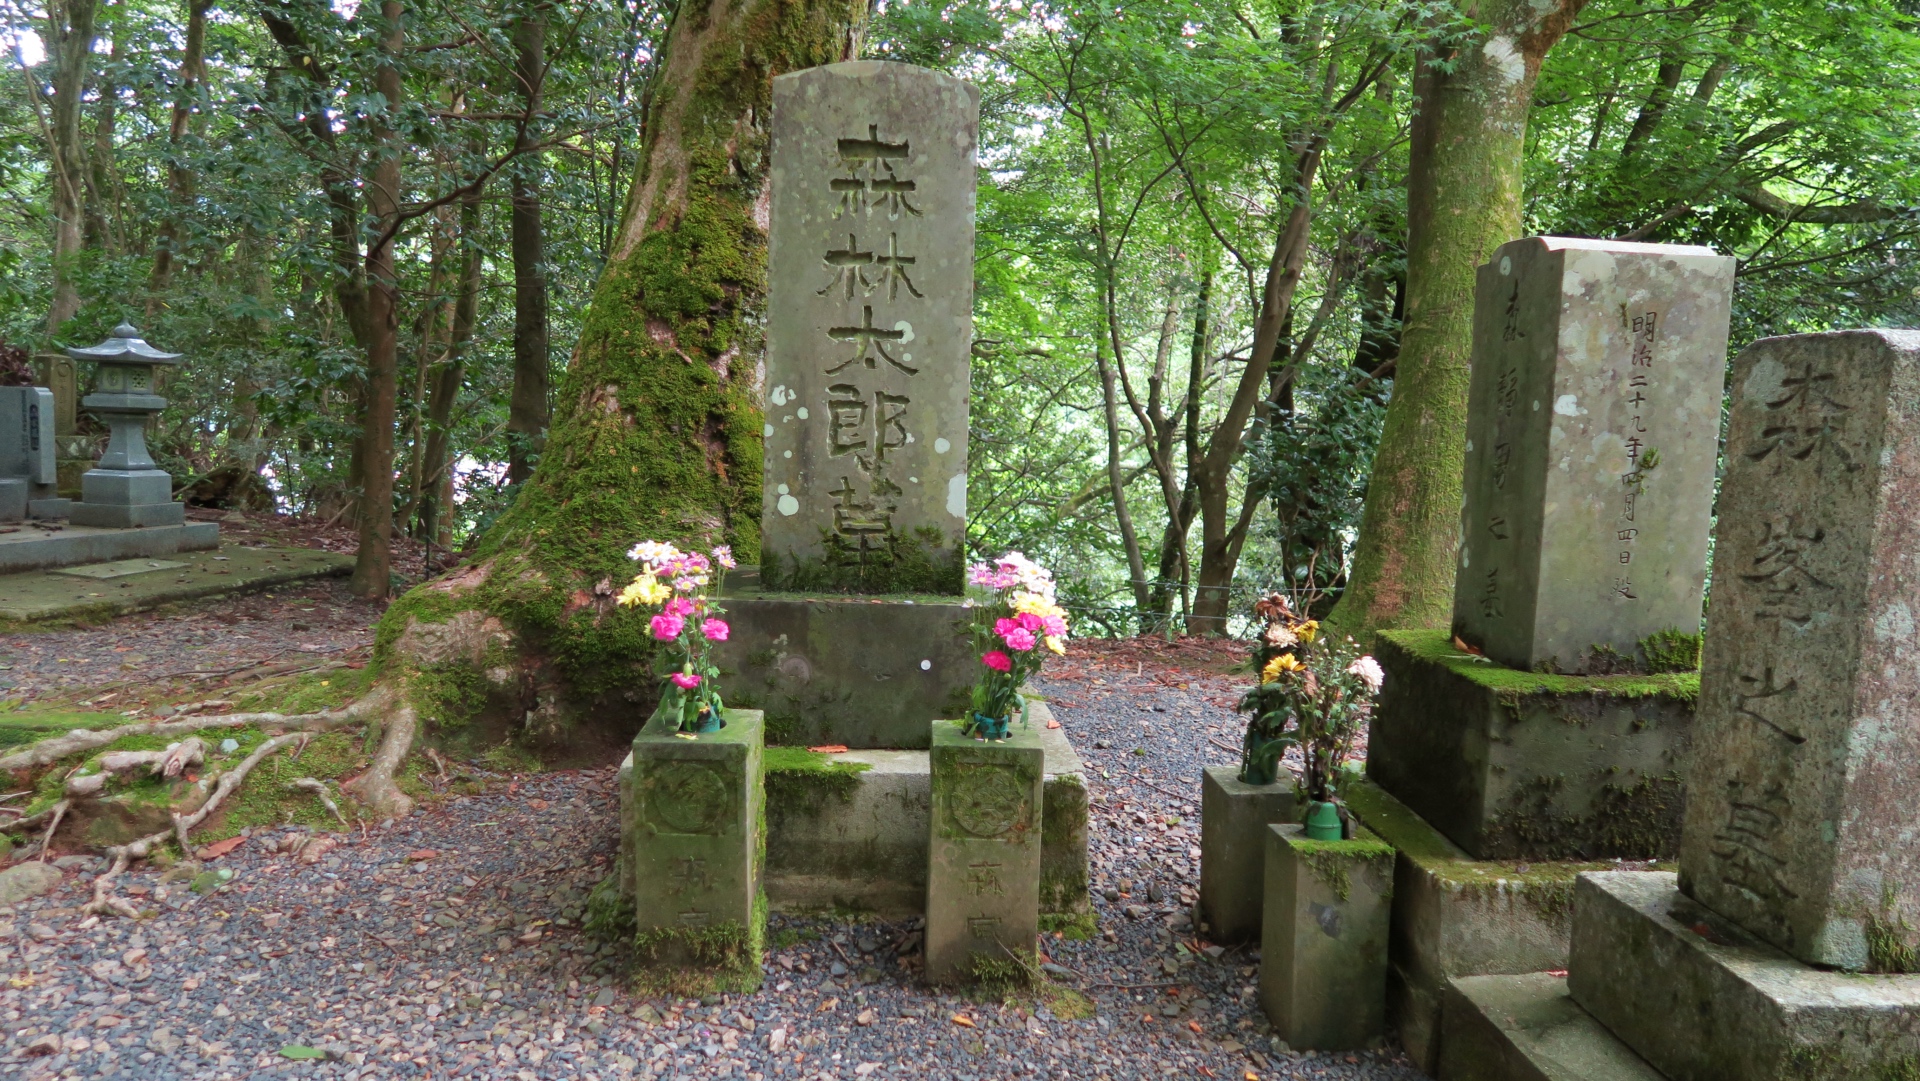 Das Grab von Mori Ogai, dessen bürgerlicher Name Mori Rintaro war.